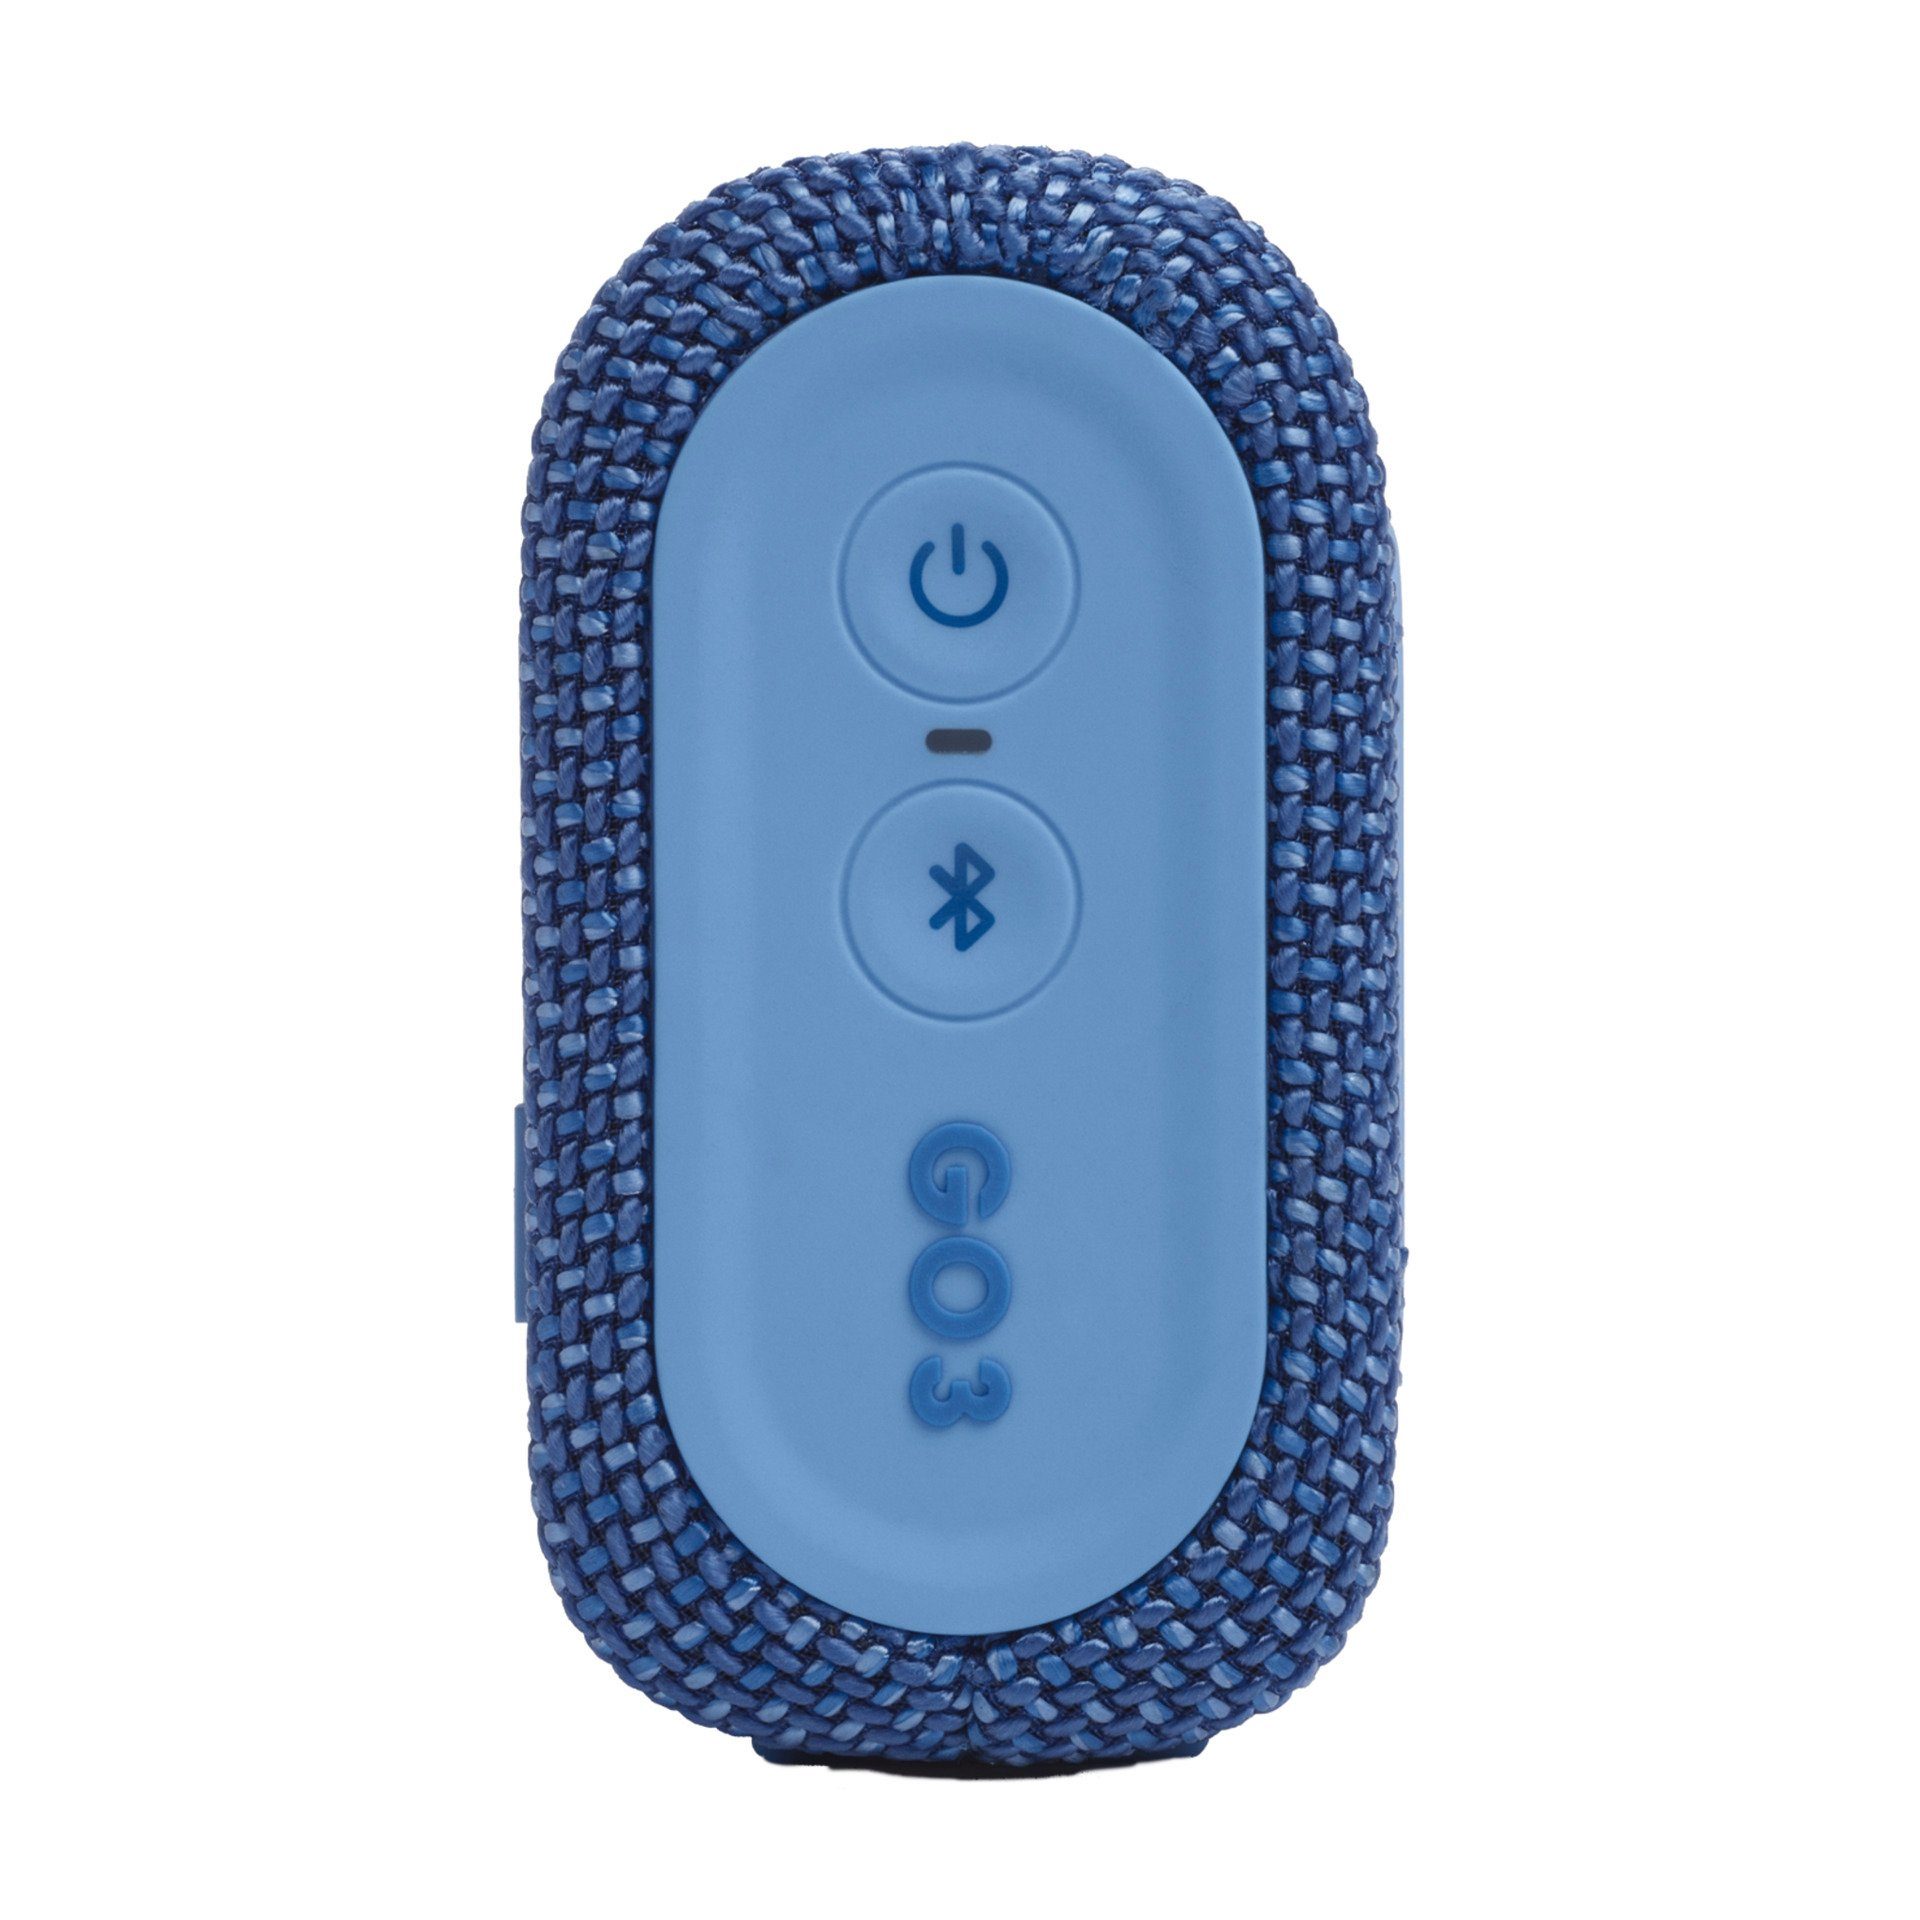 GO 3 (A2DP Blau Bluetooth, JBL ECO W) Bluetooth-Lautsprecher 4,2